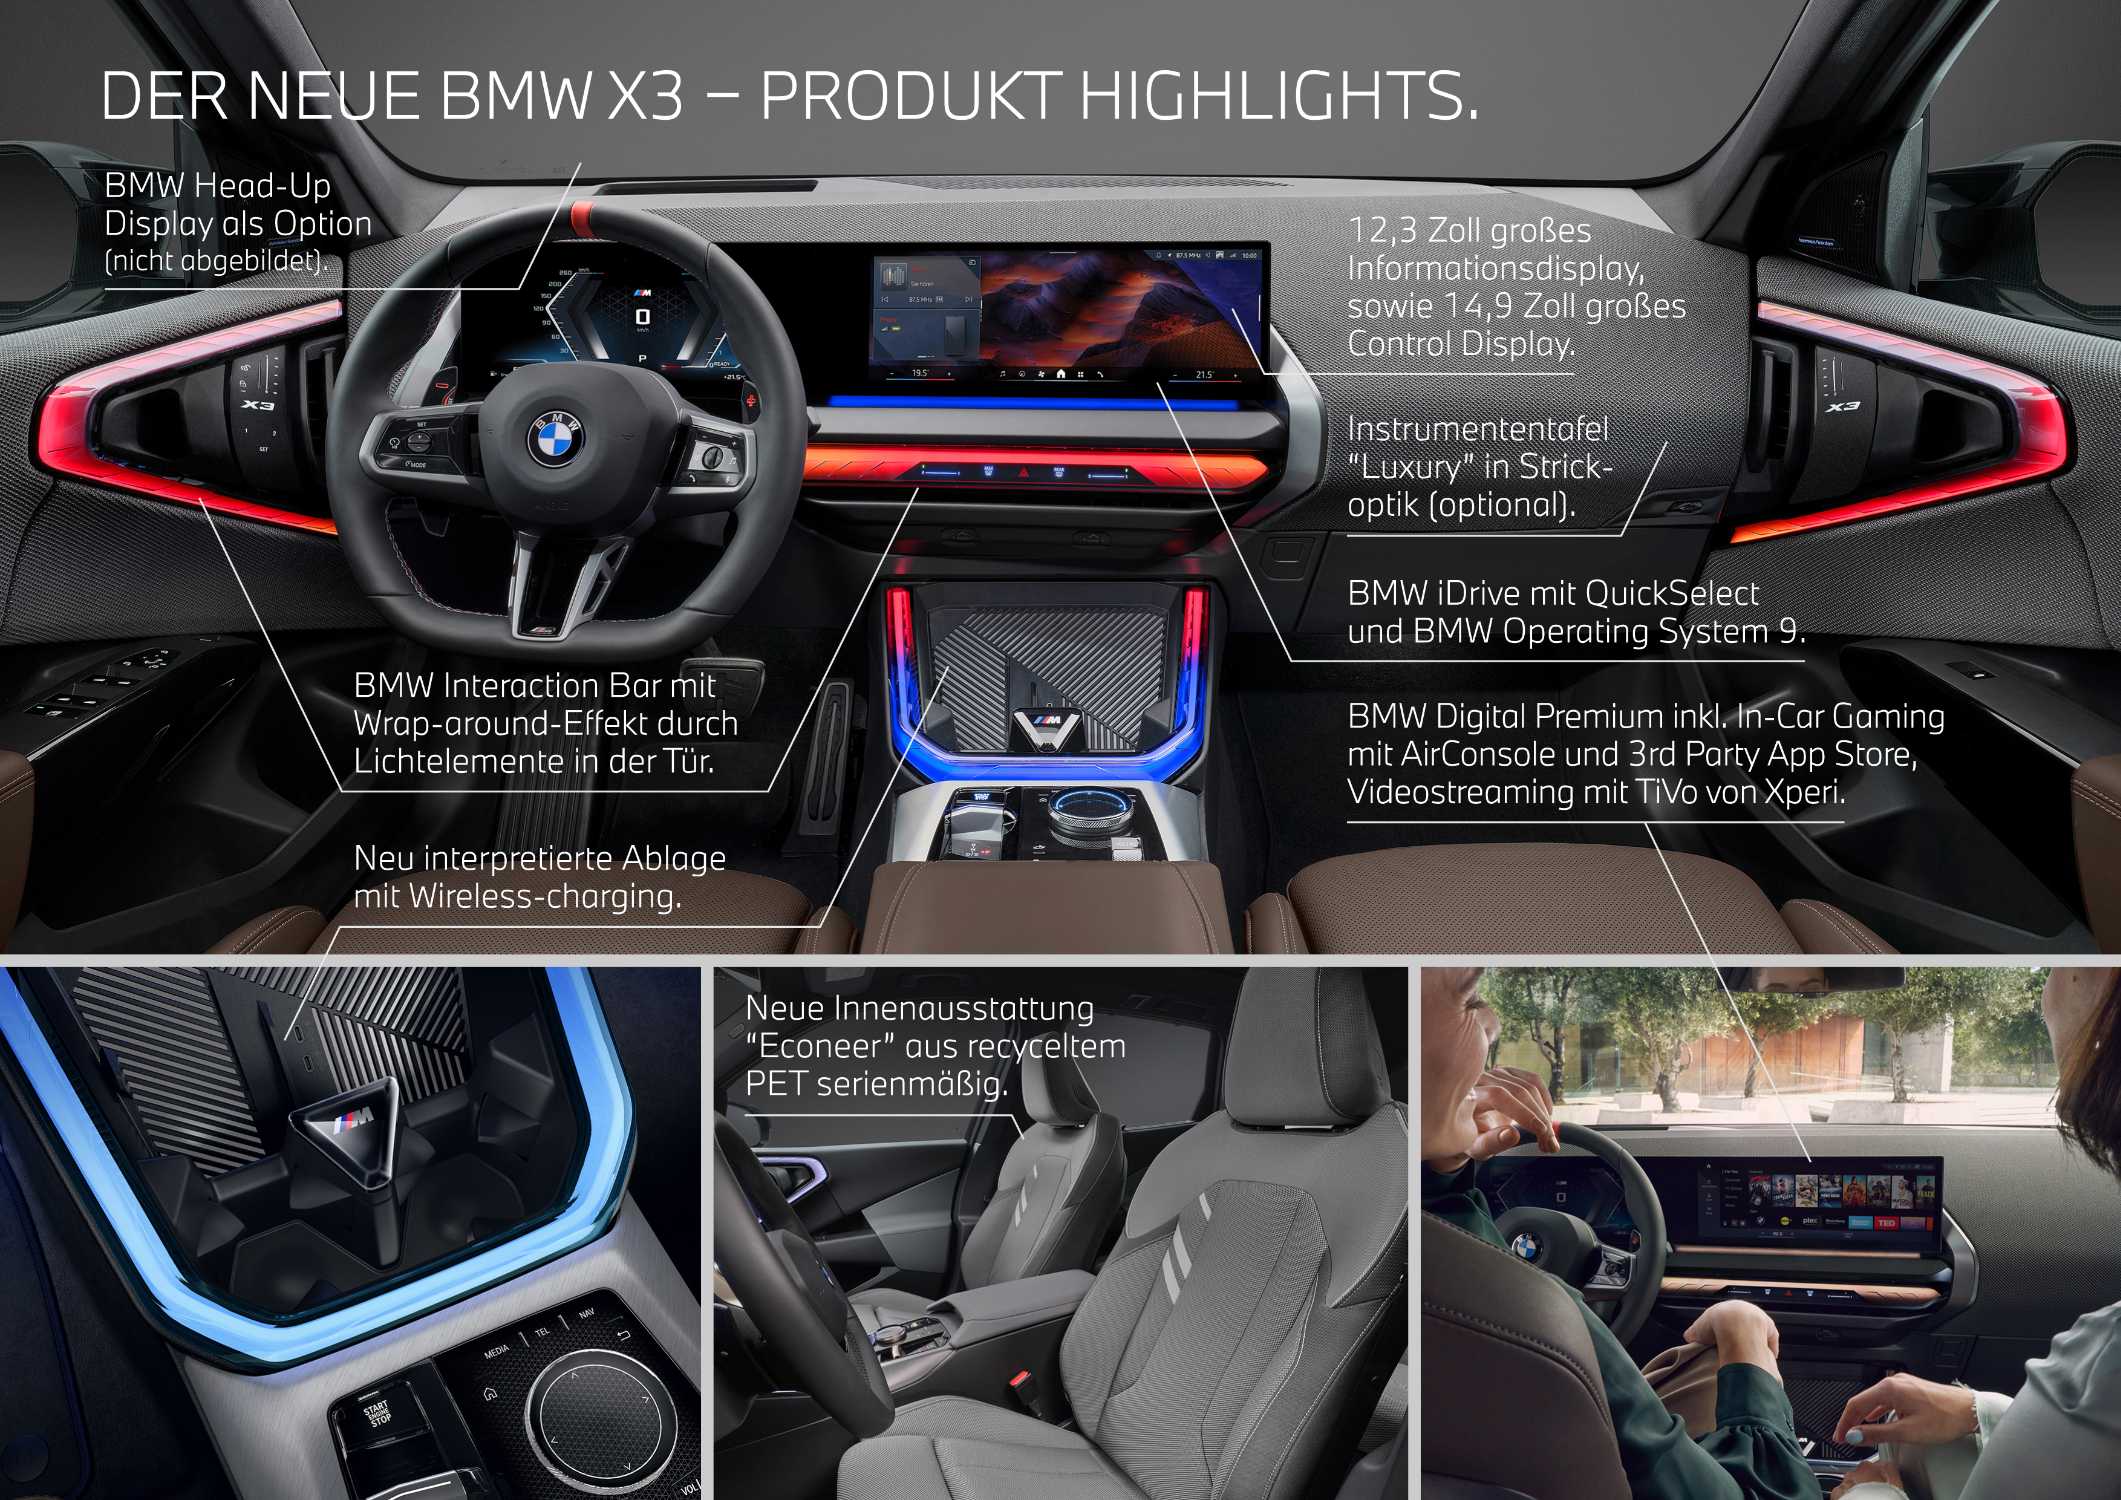 Der neue BMW X3 M50 xDrive - Infografik. (06/2024)